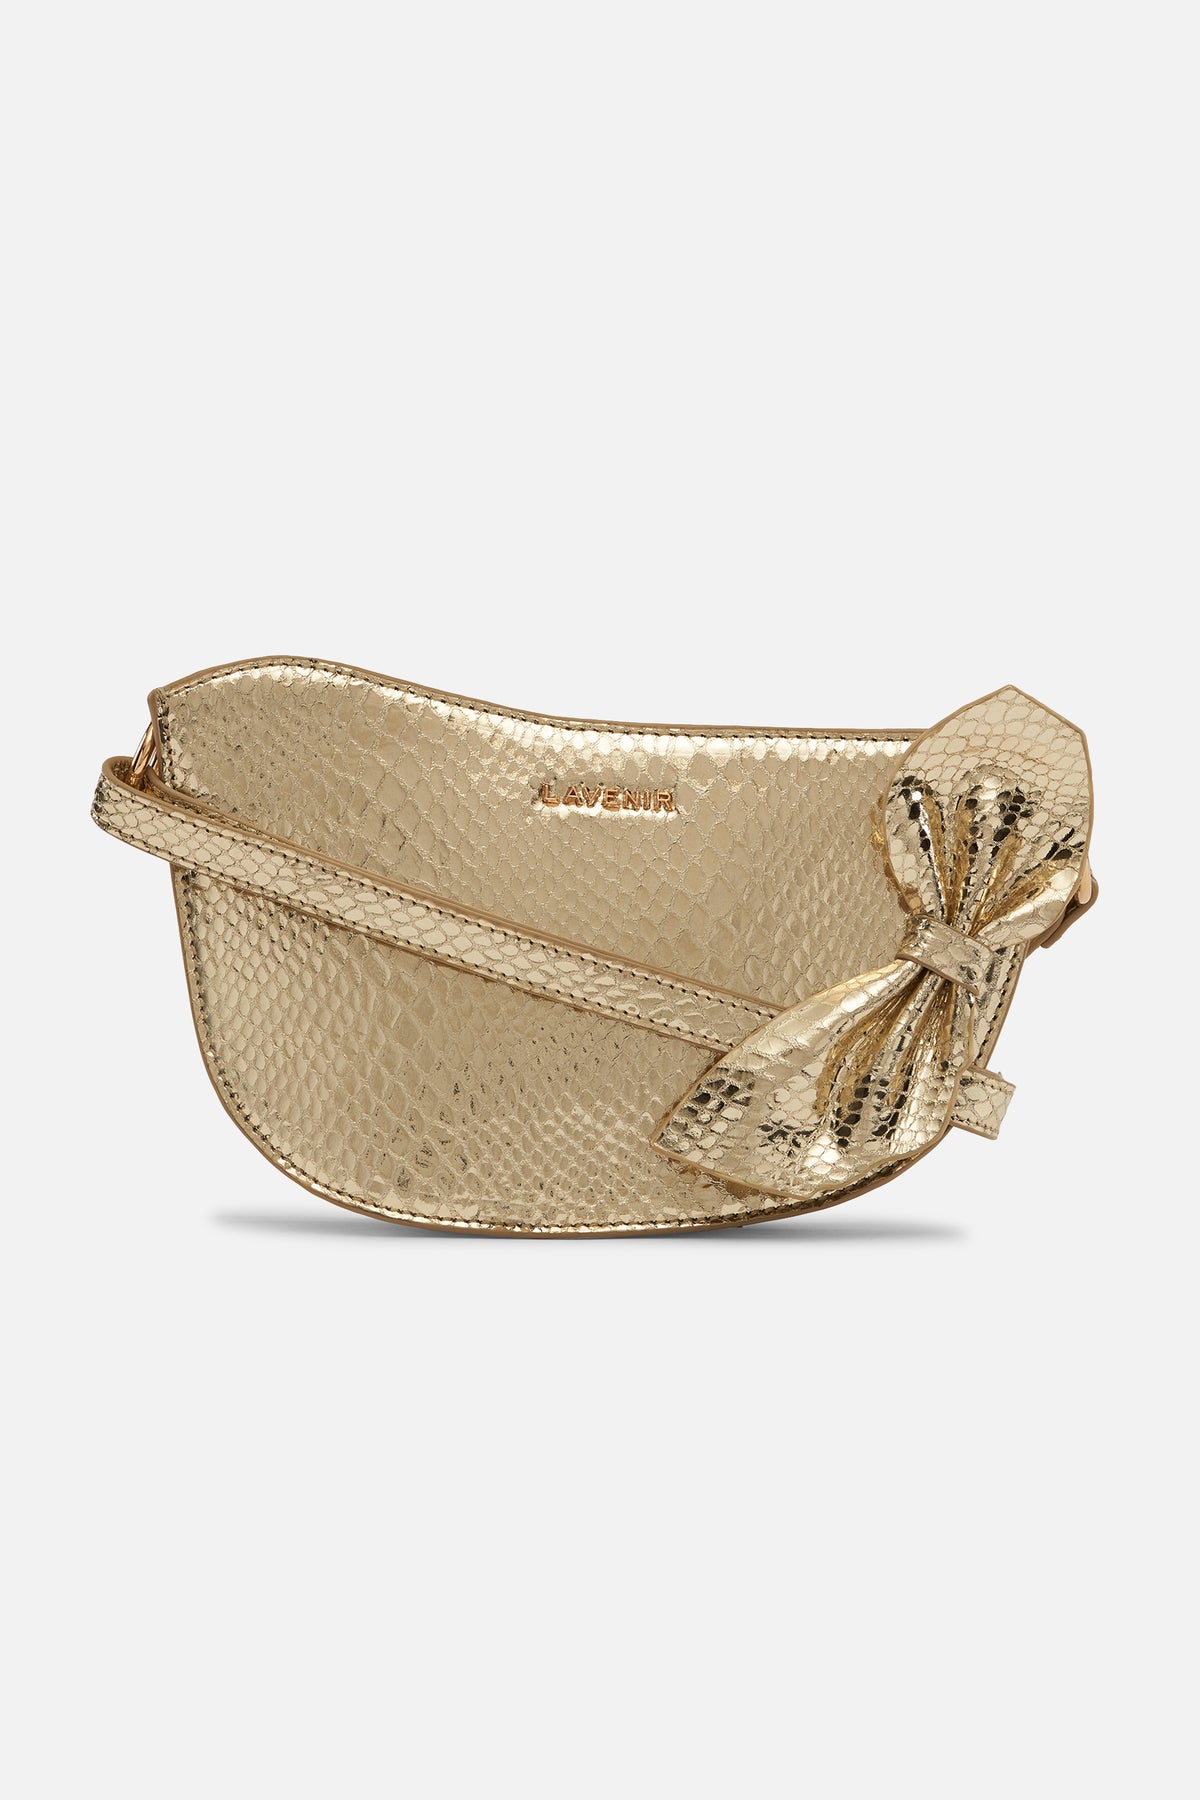 Raessa - Bow Bag - Gold Metallic Python Print